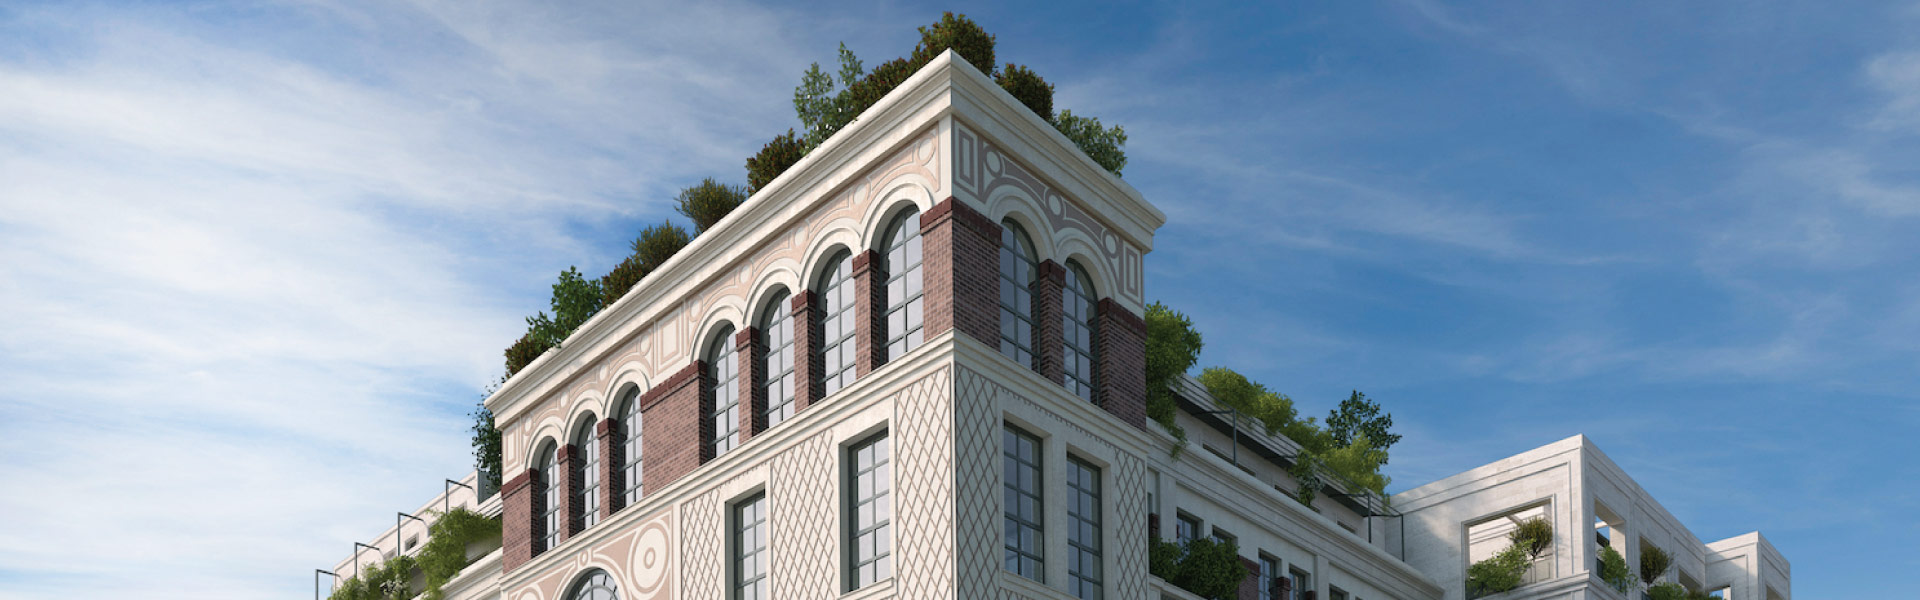 Washington Building - Tailored Real Estate Investment - FCMA Milano